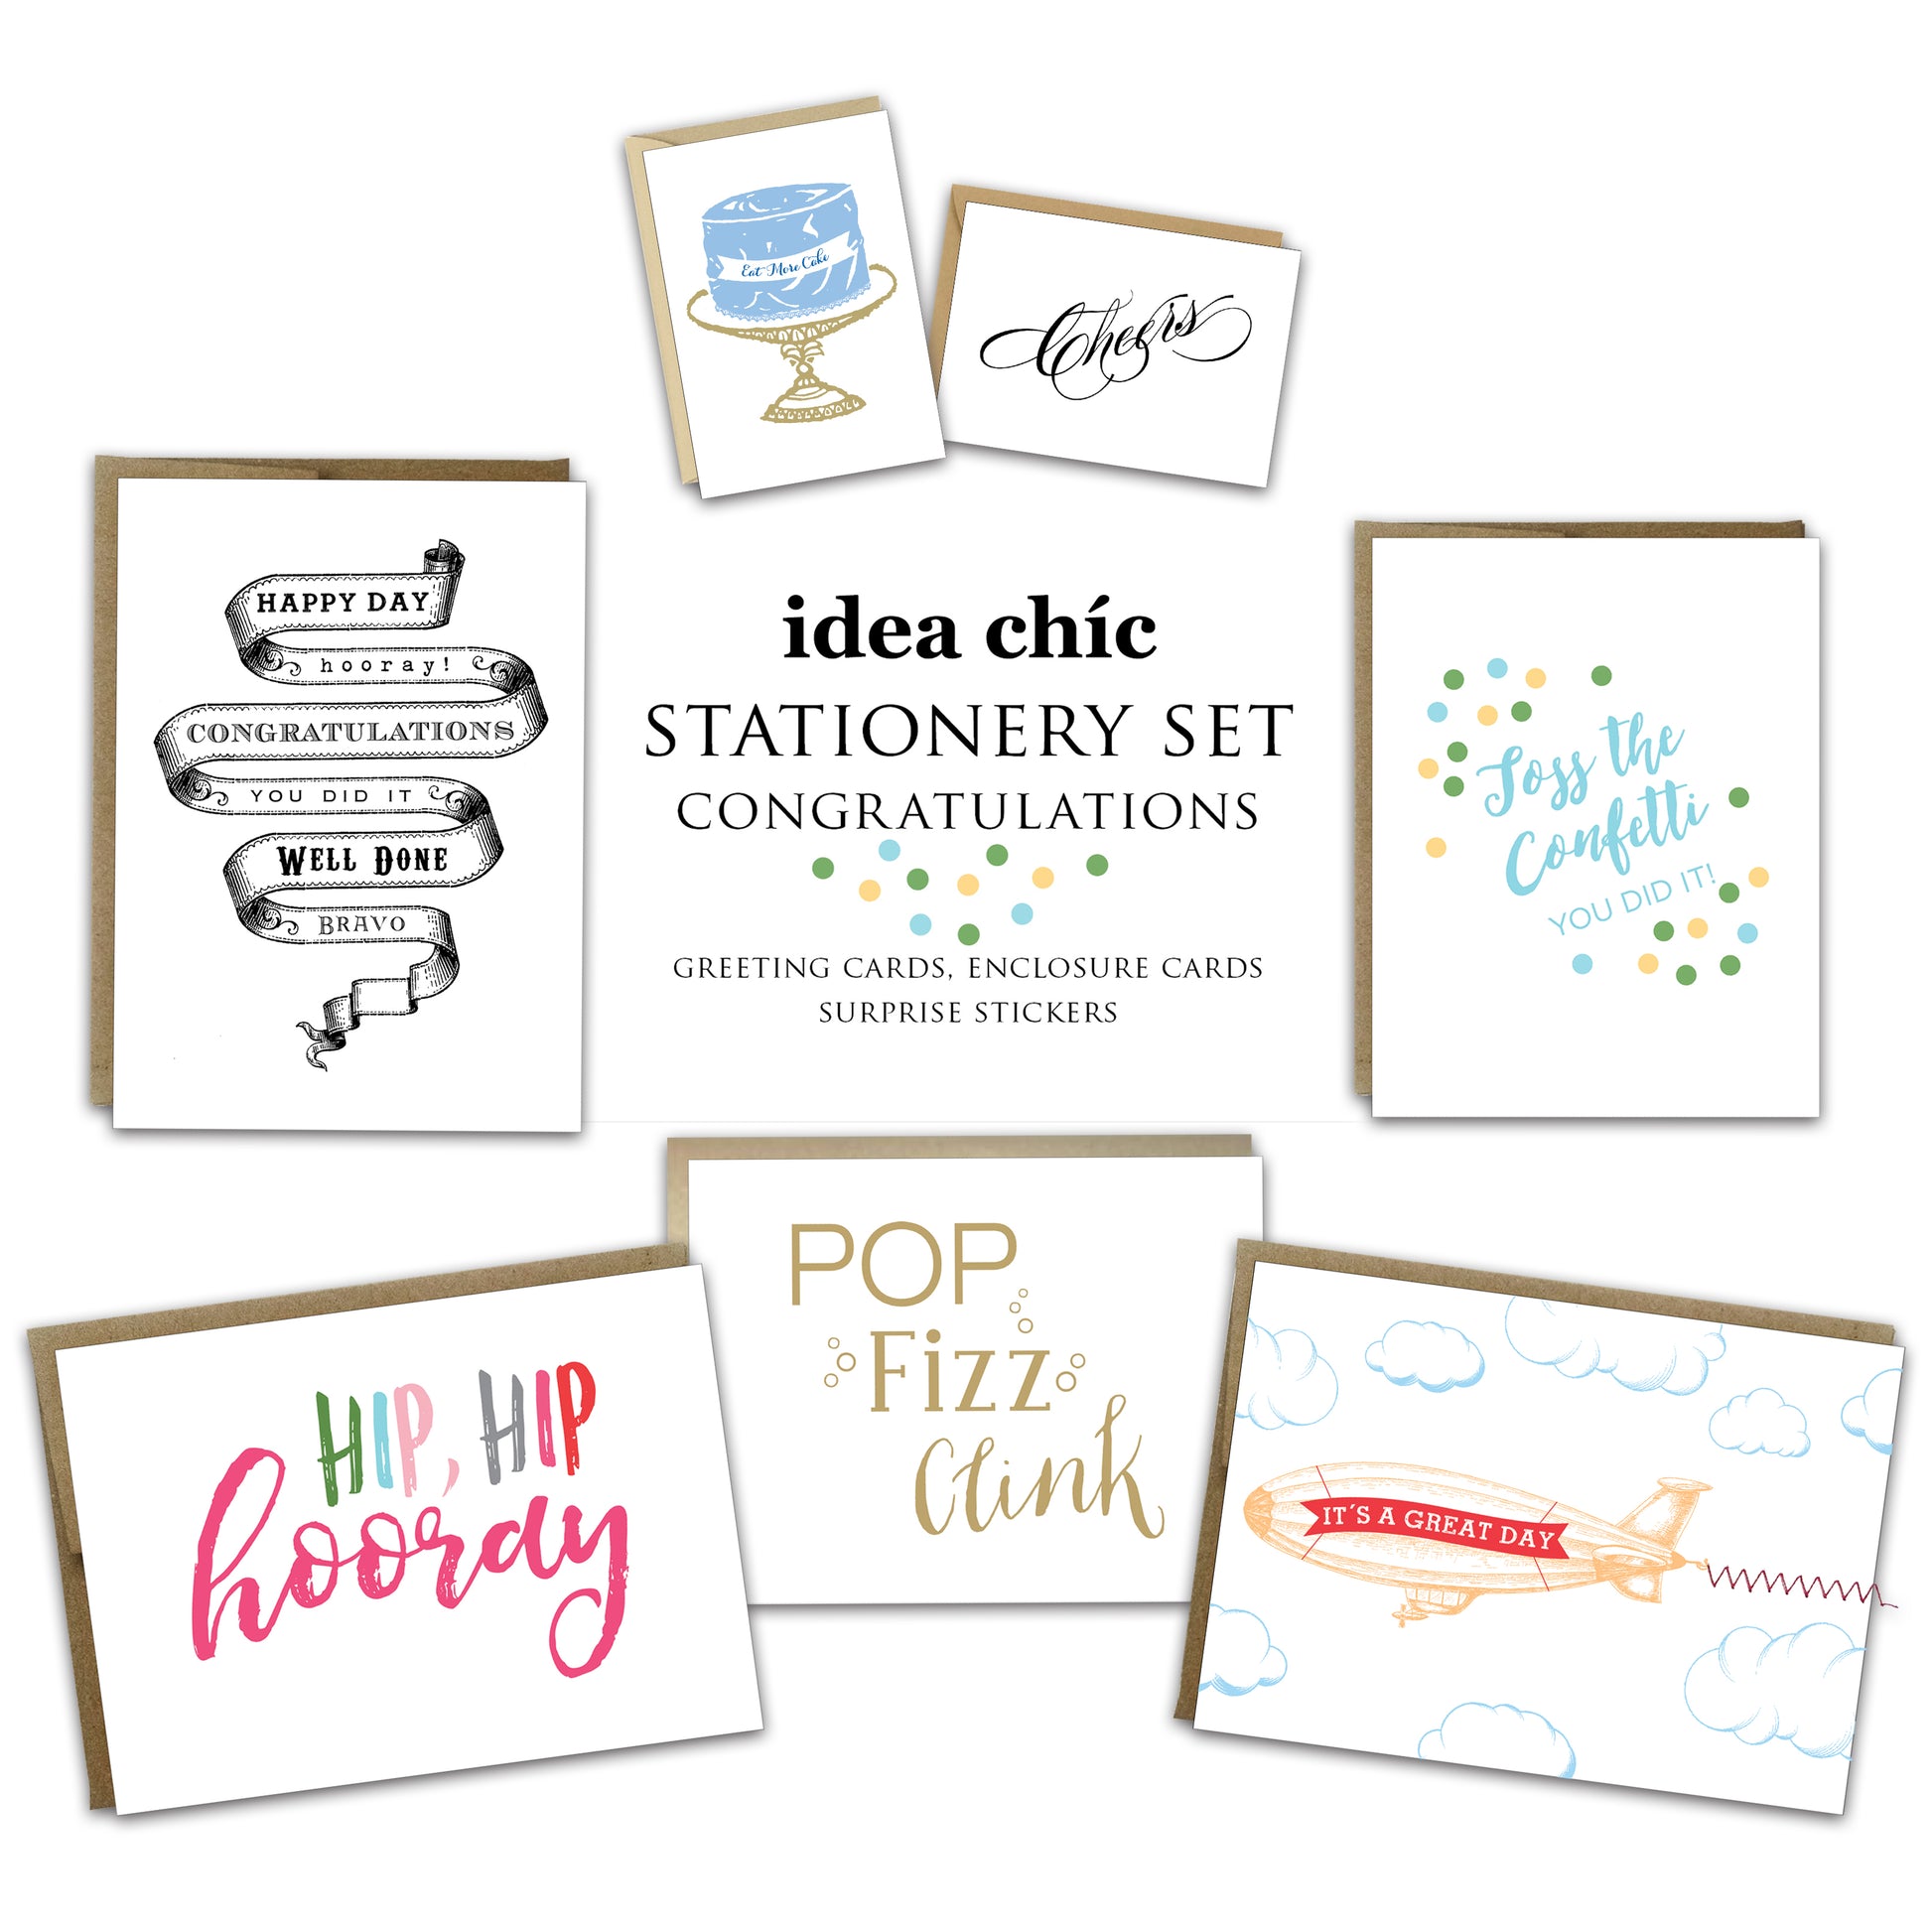 Congratulations and Celebration Cards - Idea Chic Stationery Box Set - Idea Chíc